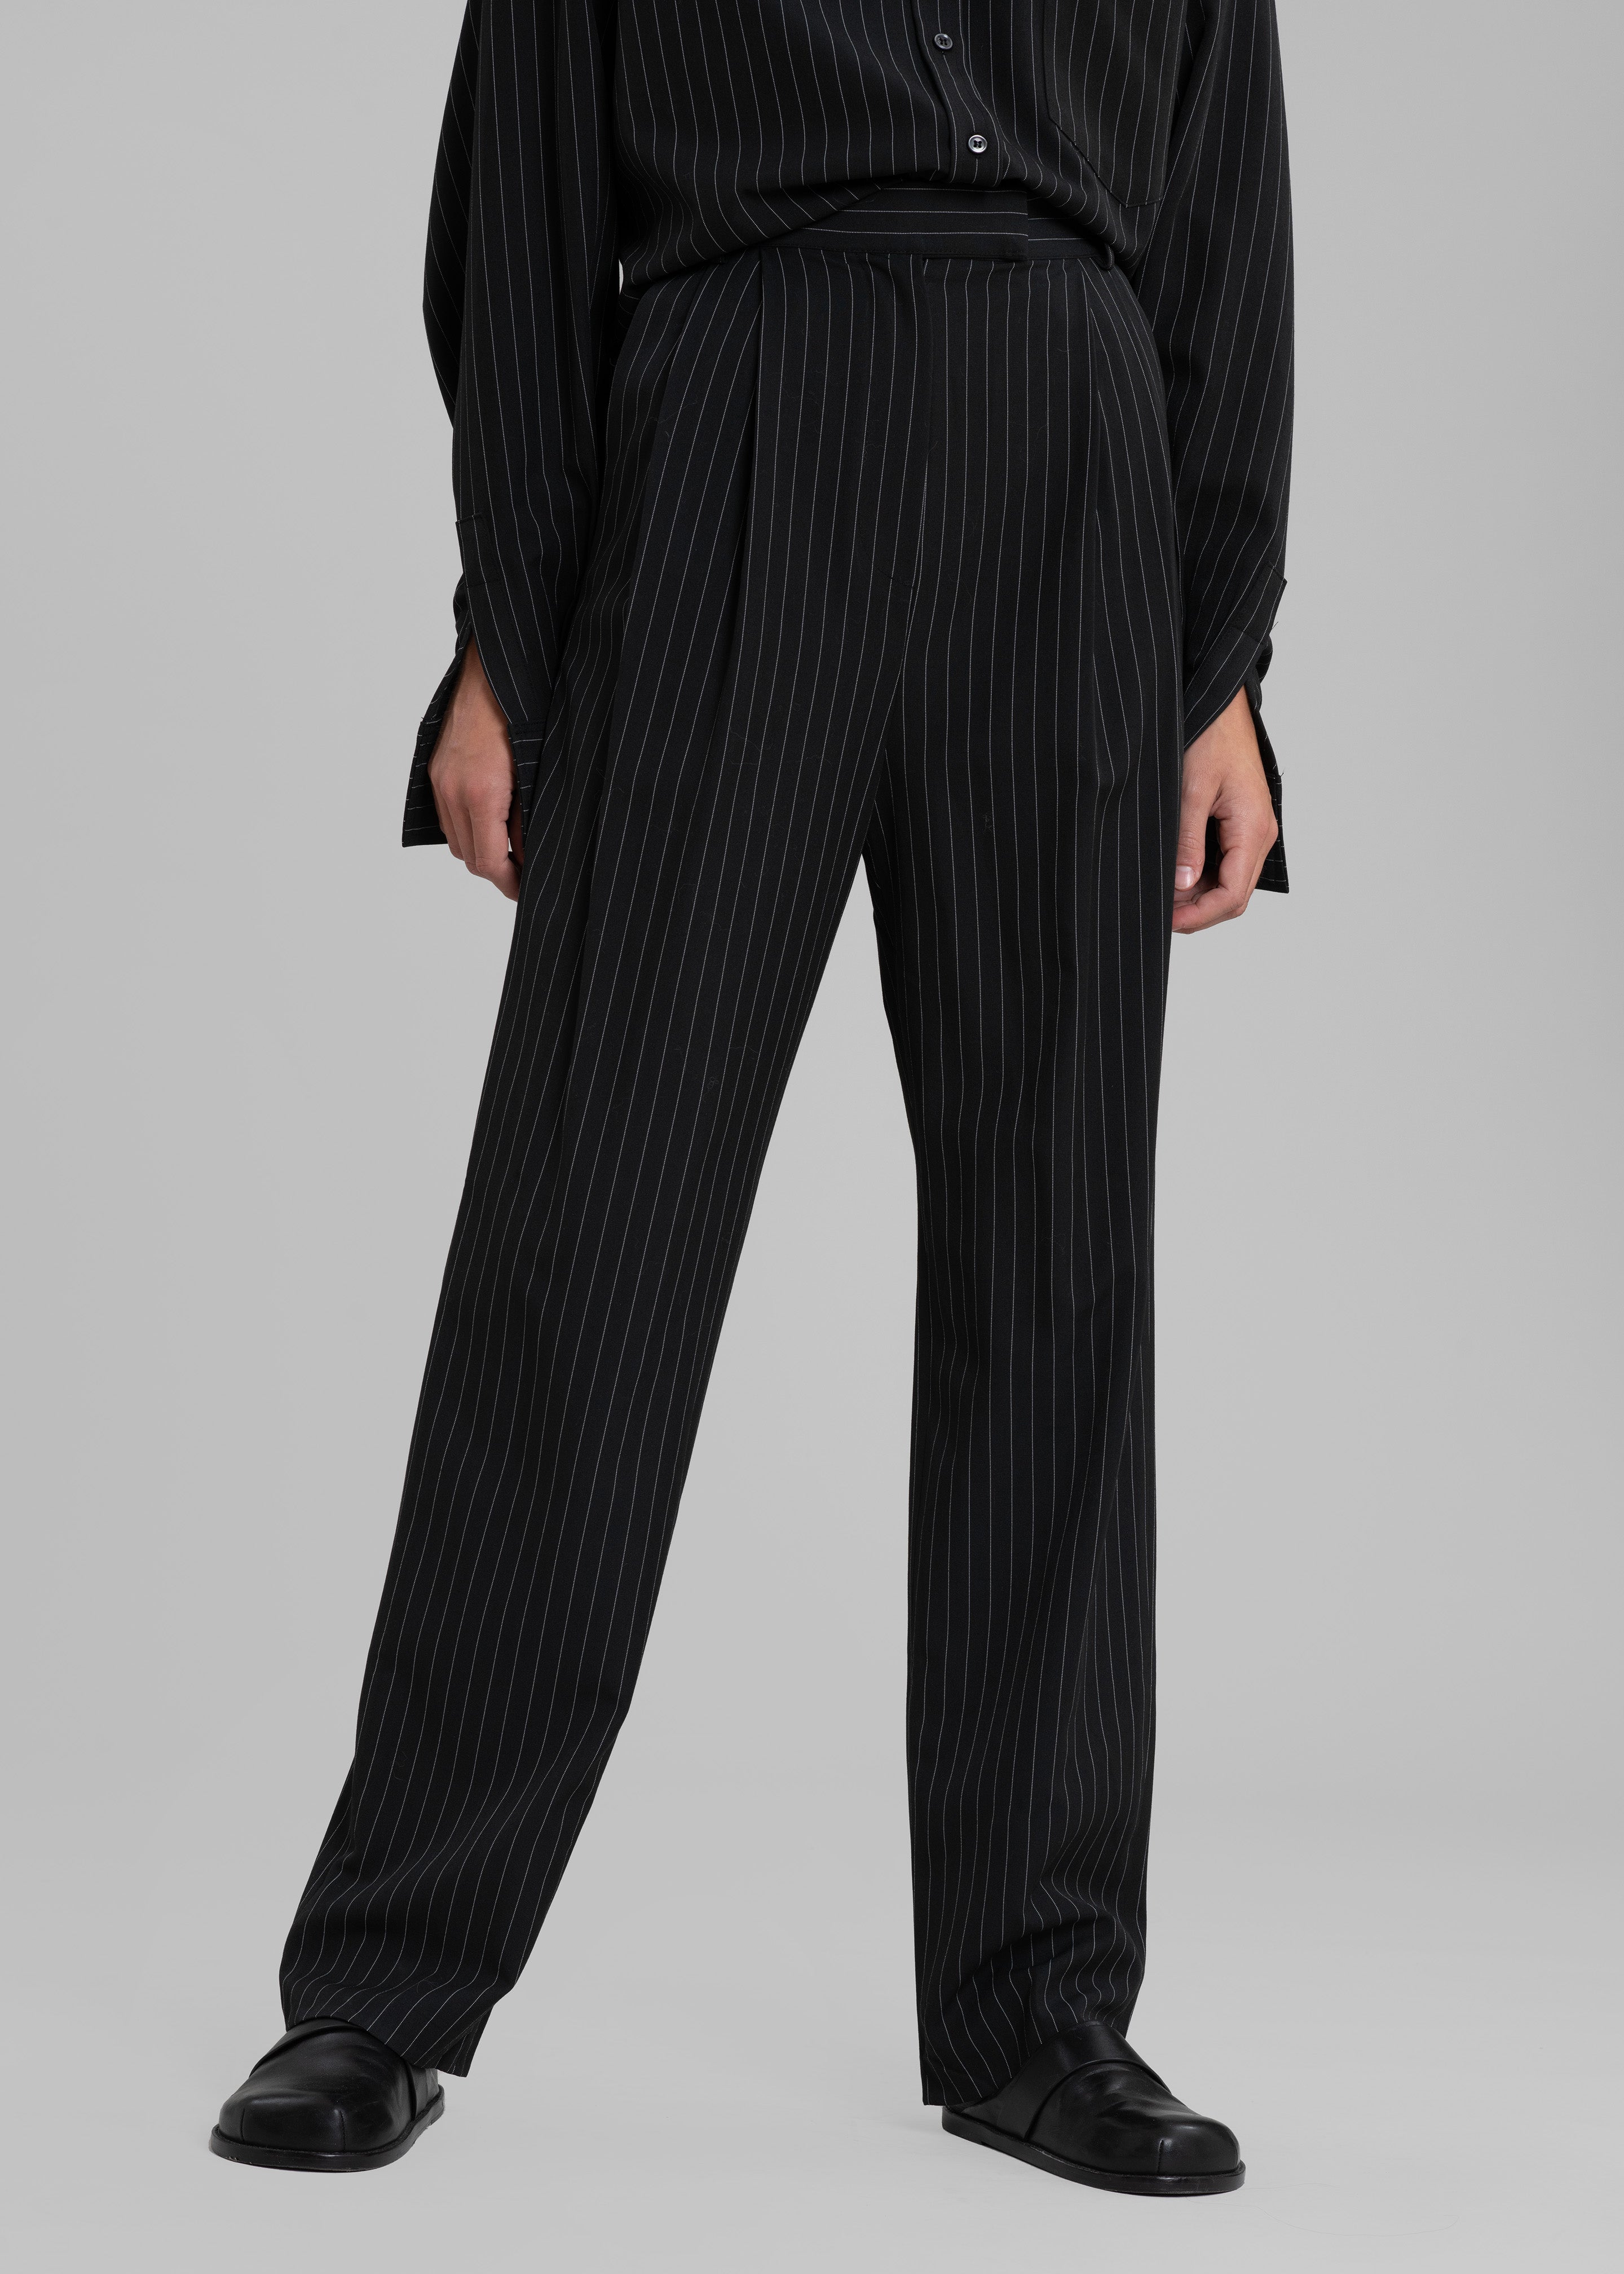 Black Striped High-Waisted Wide Pants | GANNI US